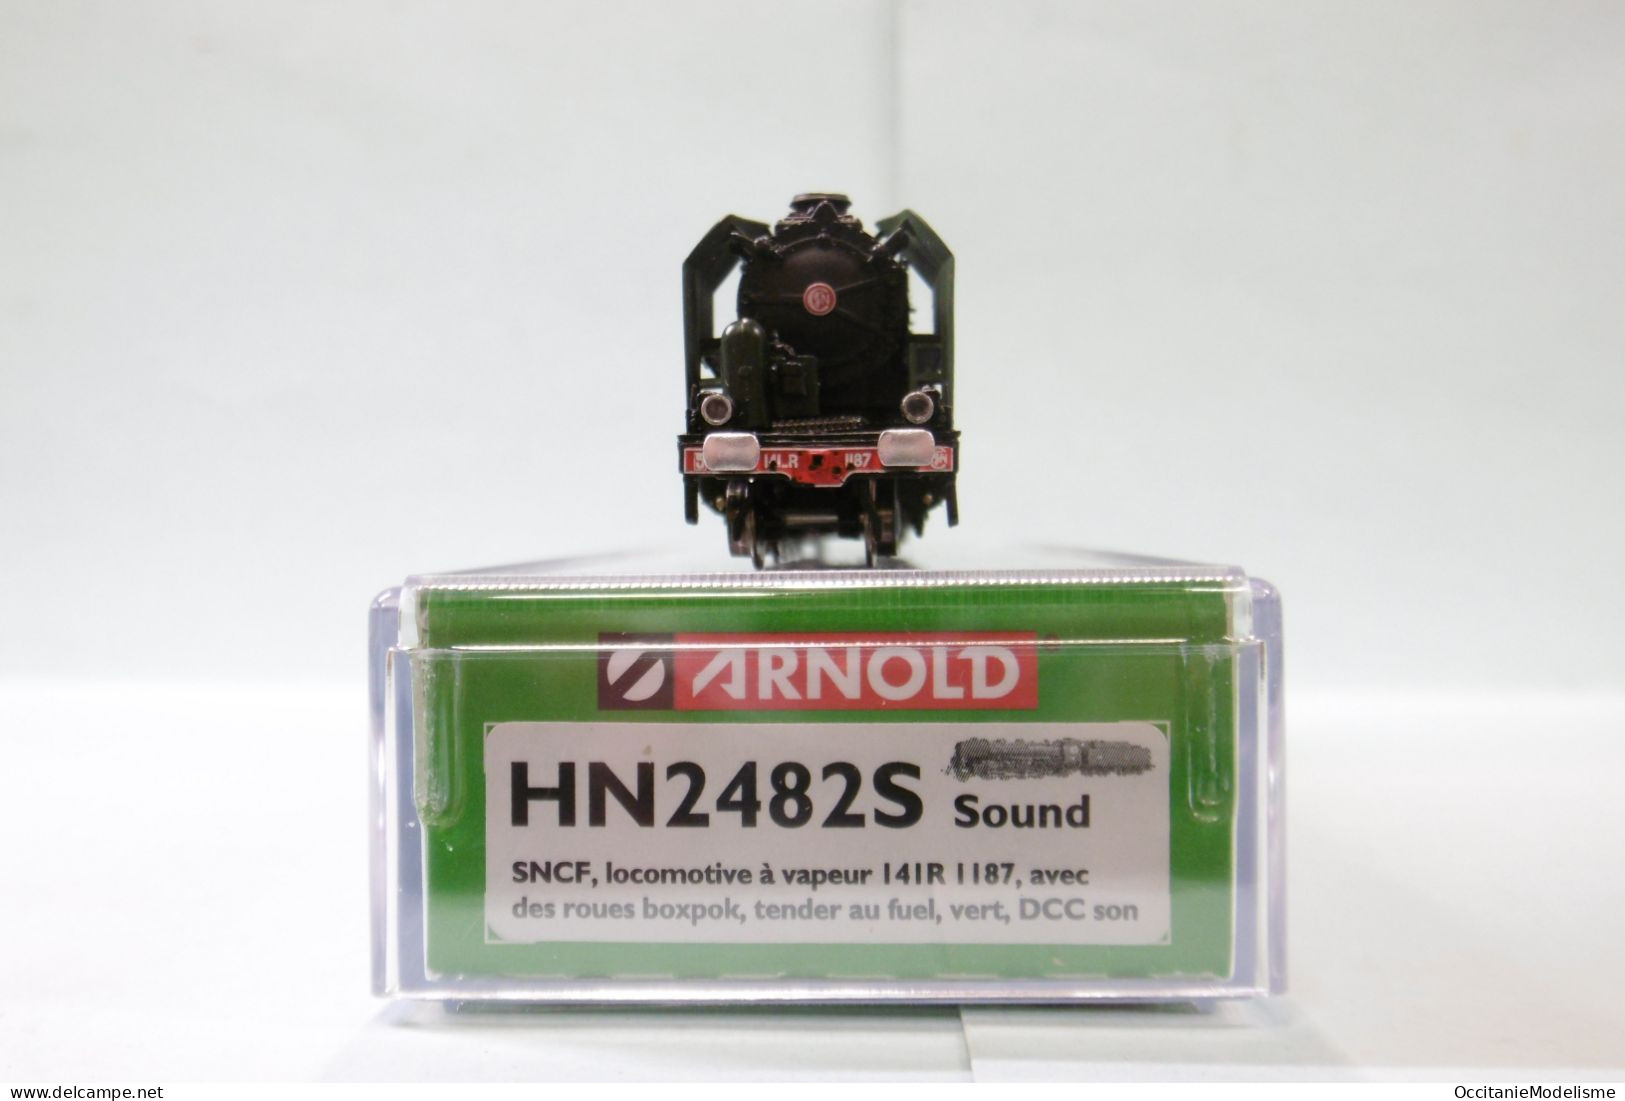 Arnold - Locomotive vapeur 141 R 1187 Fuel vert SNCF DCC Sound réf. HN2482S Neuf NBO N 1/160